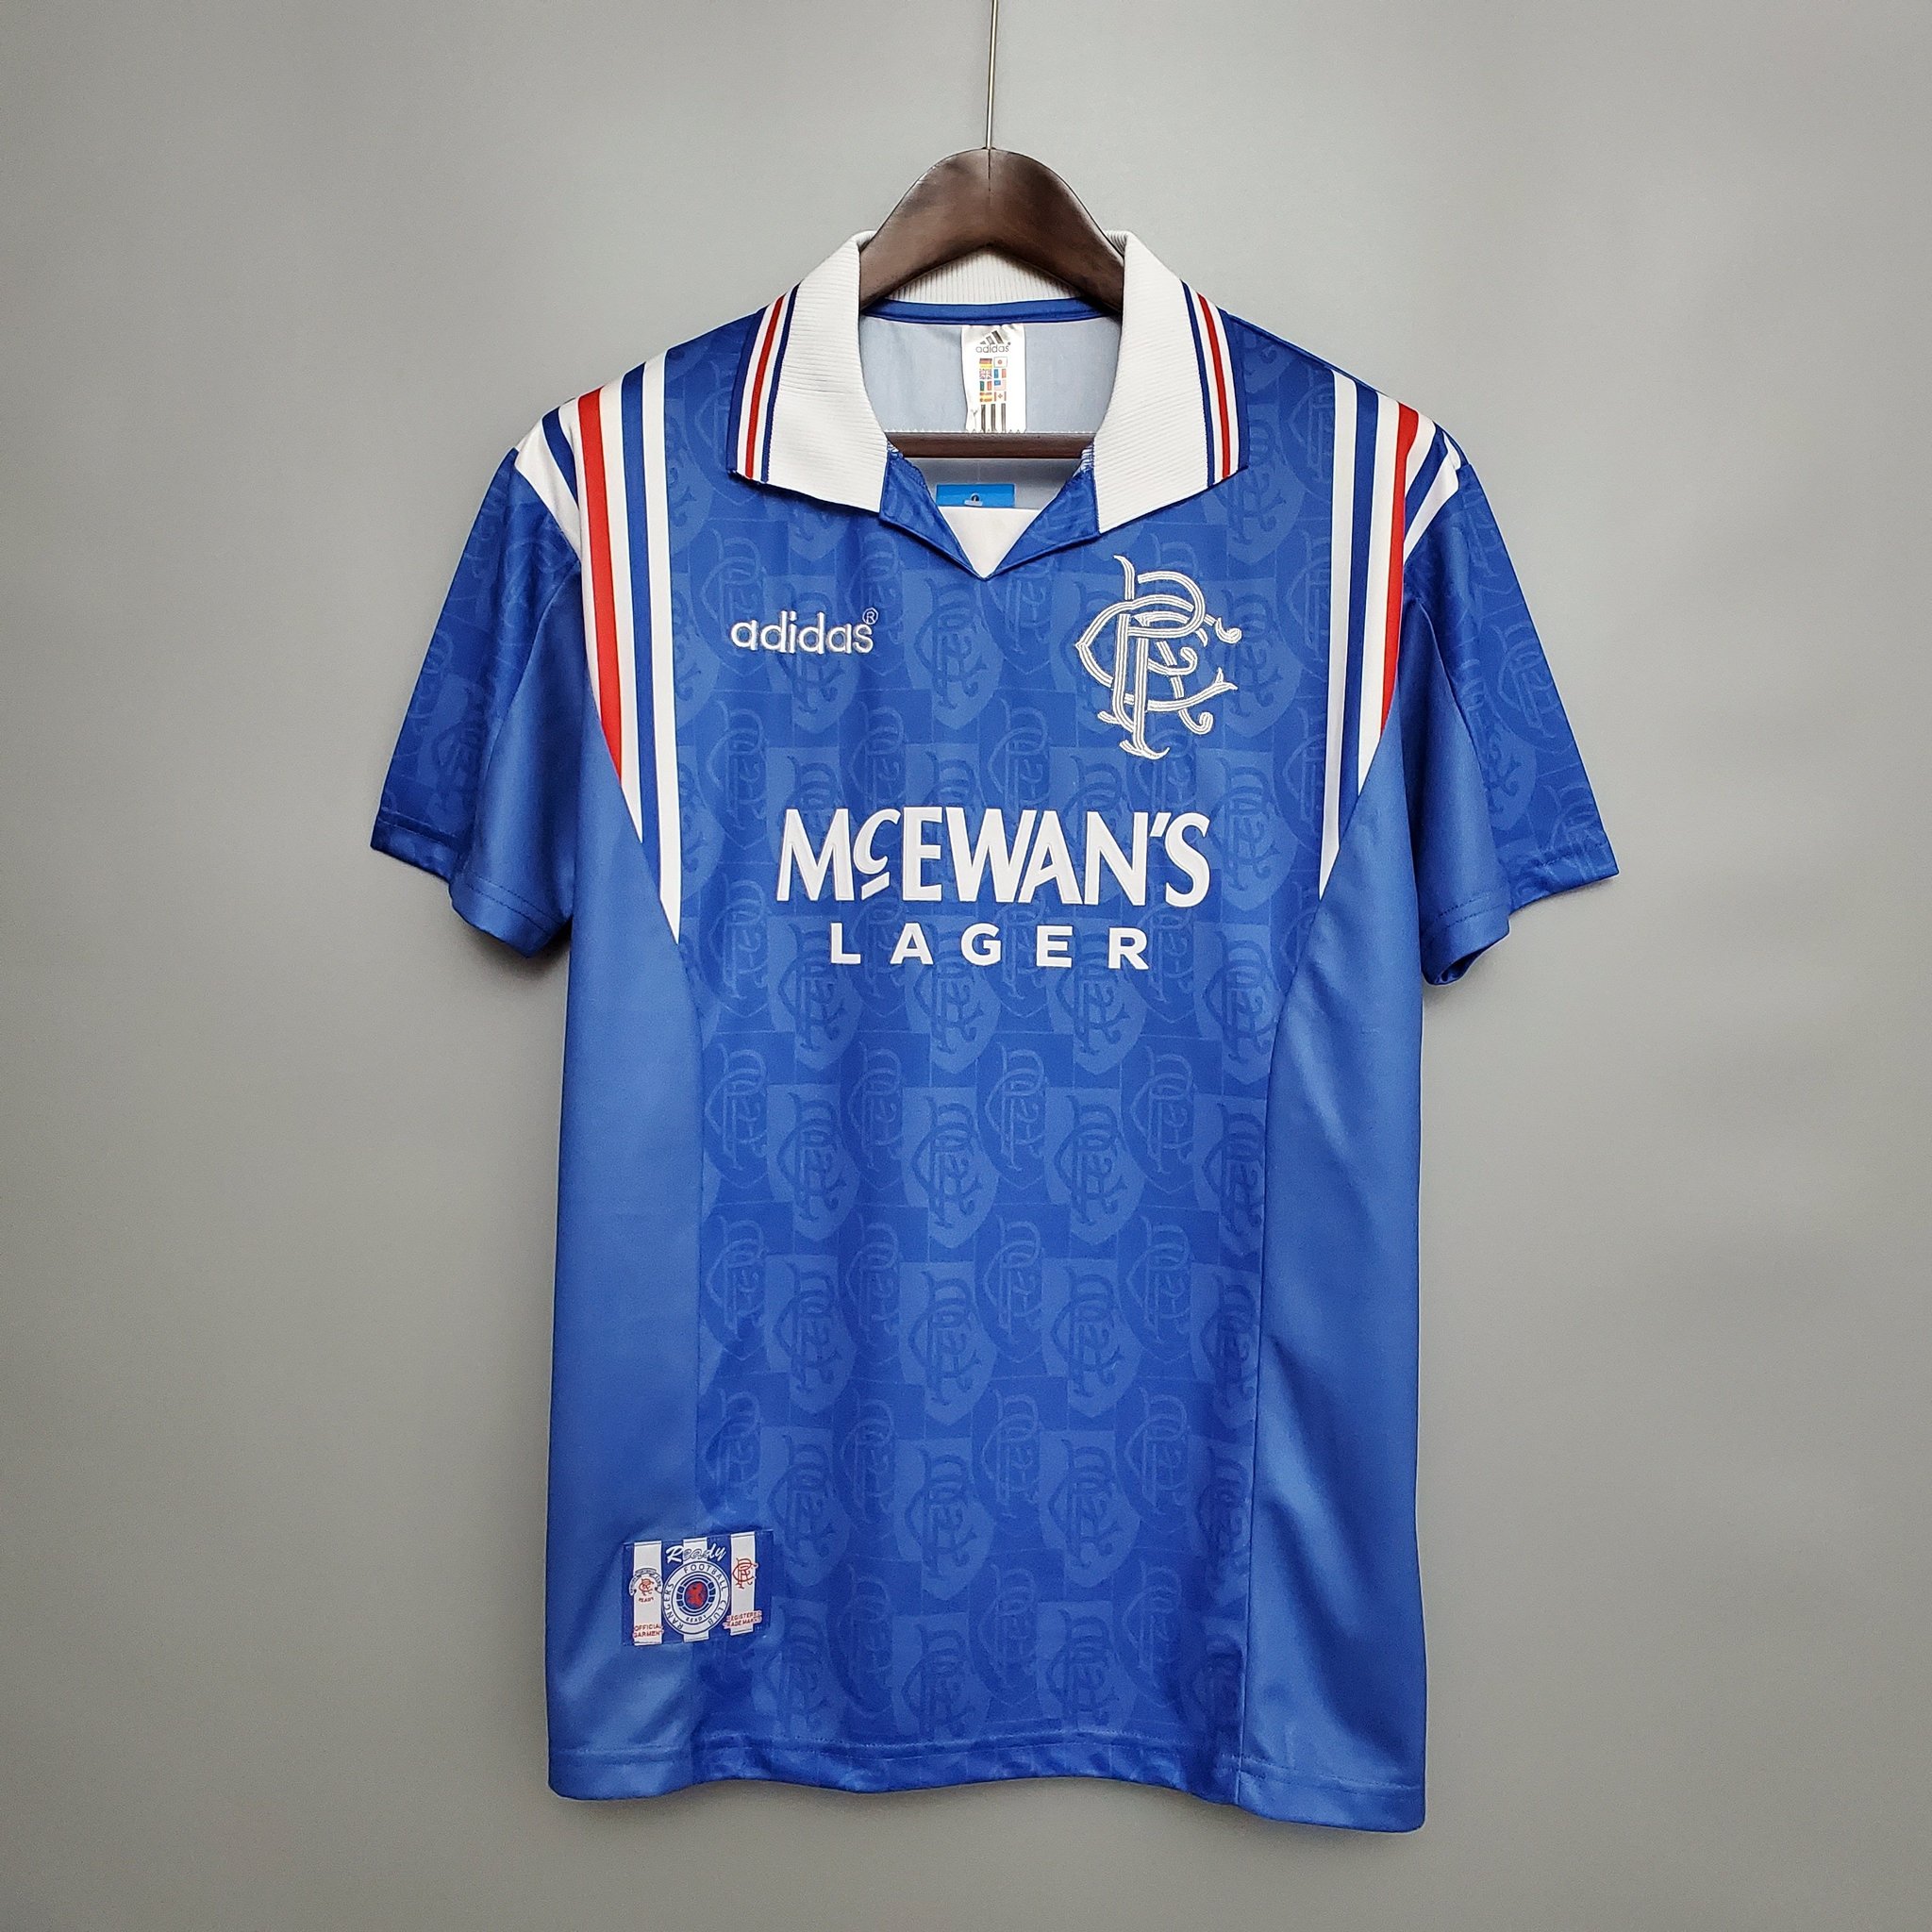 Glasgow Rangers 1996/97 Home kit